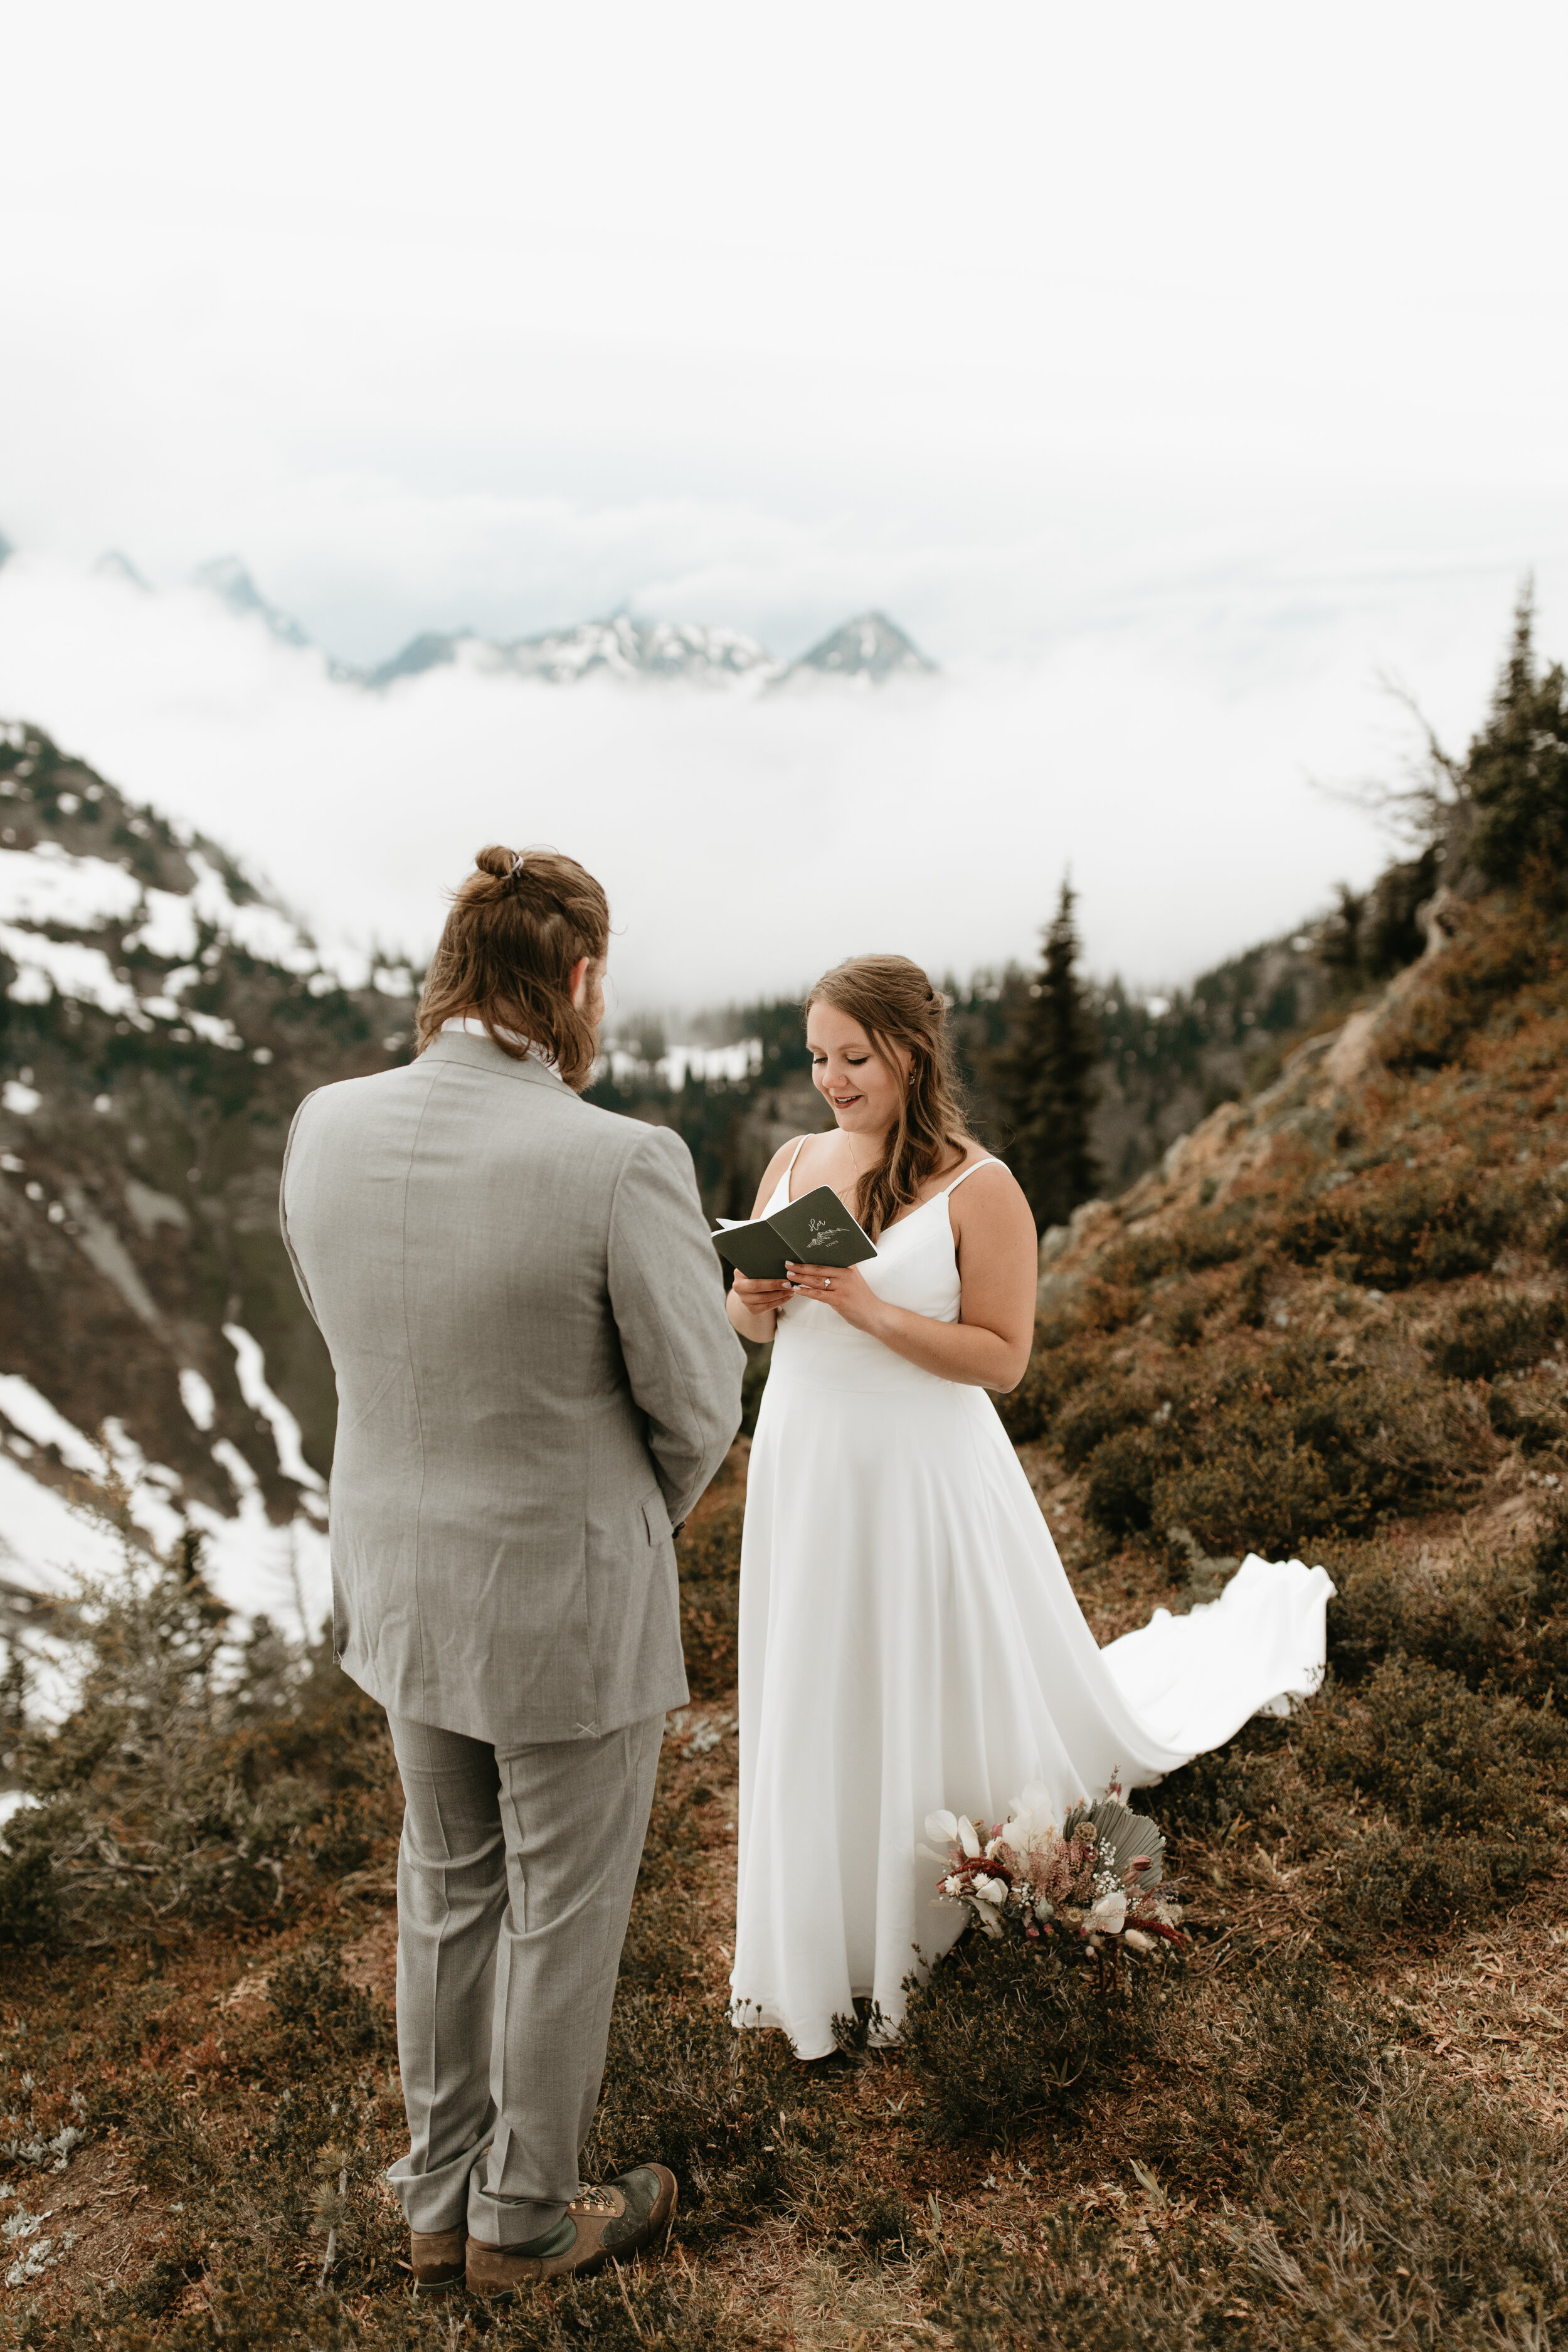 Nicole-Daacke-Photography-wedding-vows.jpg